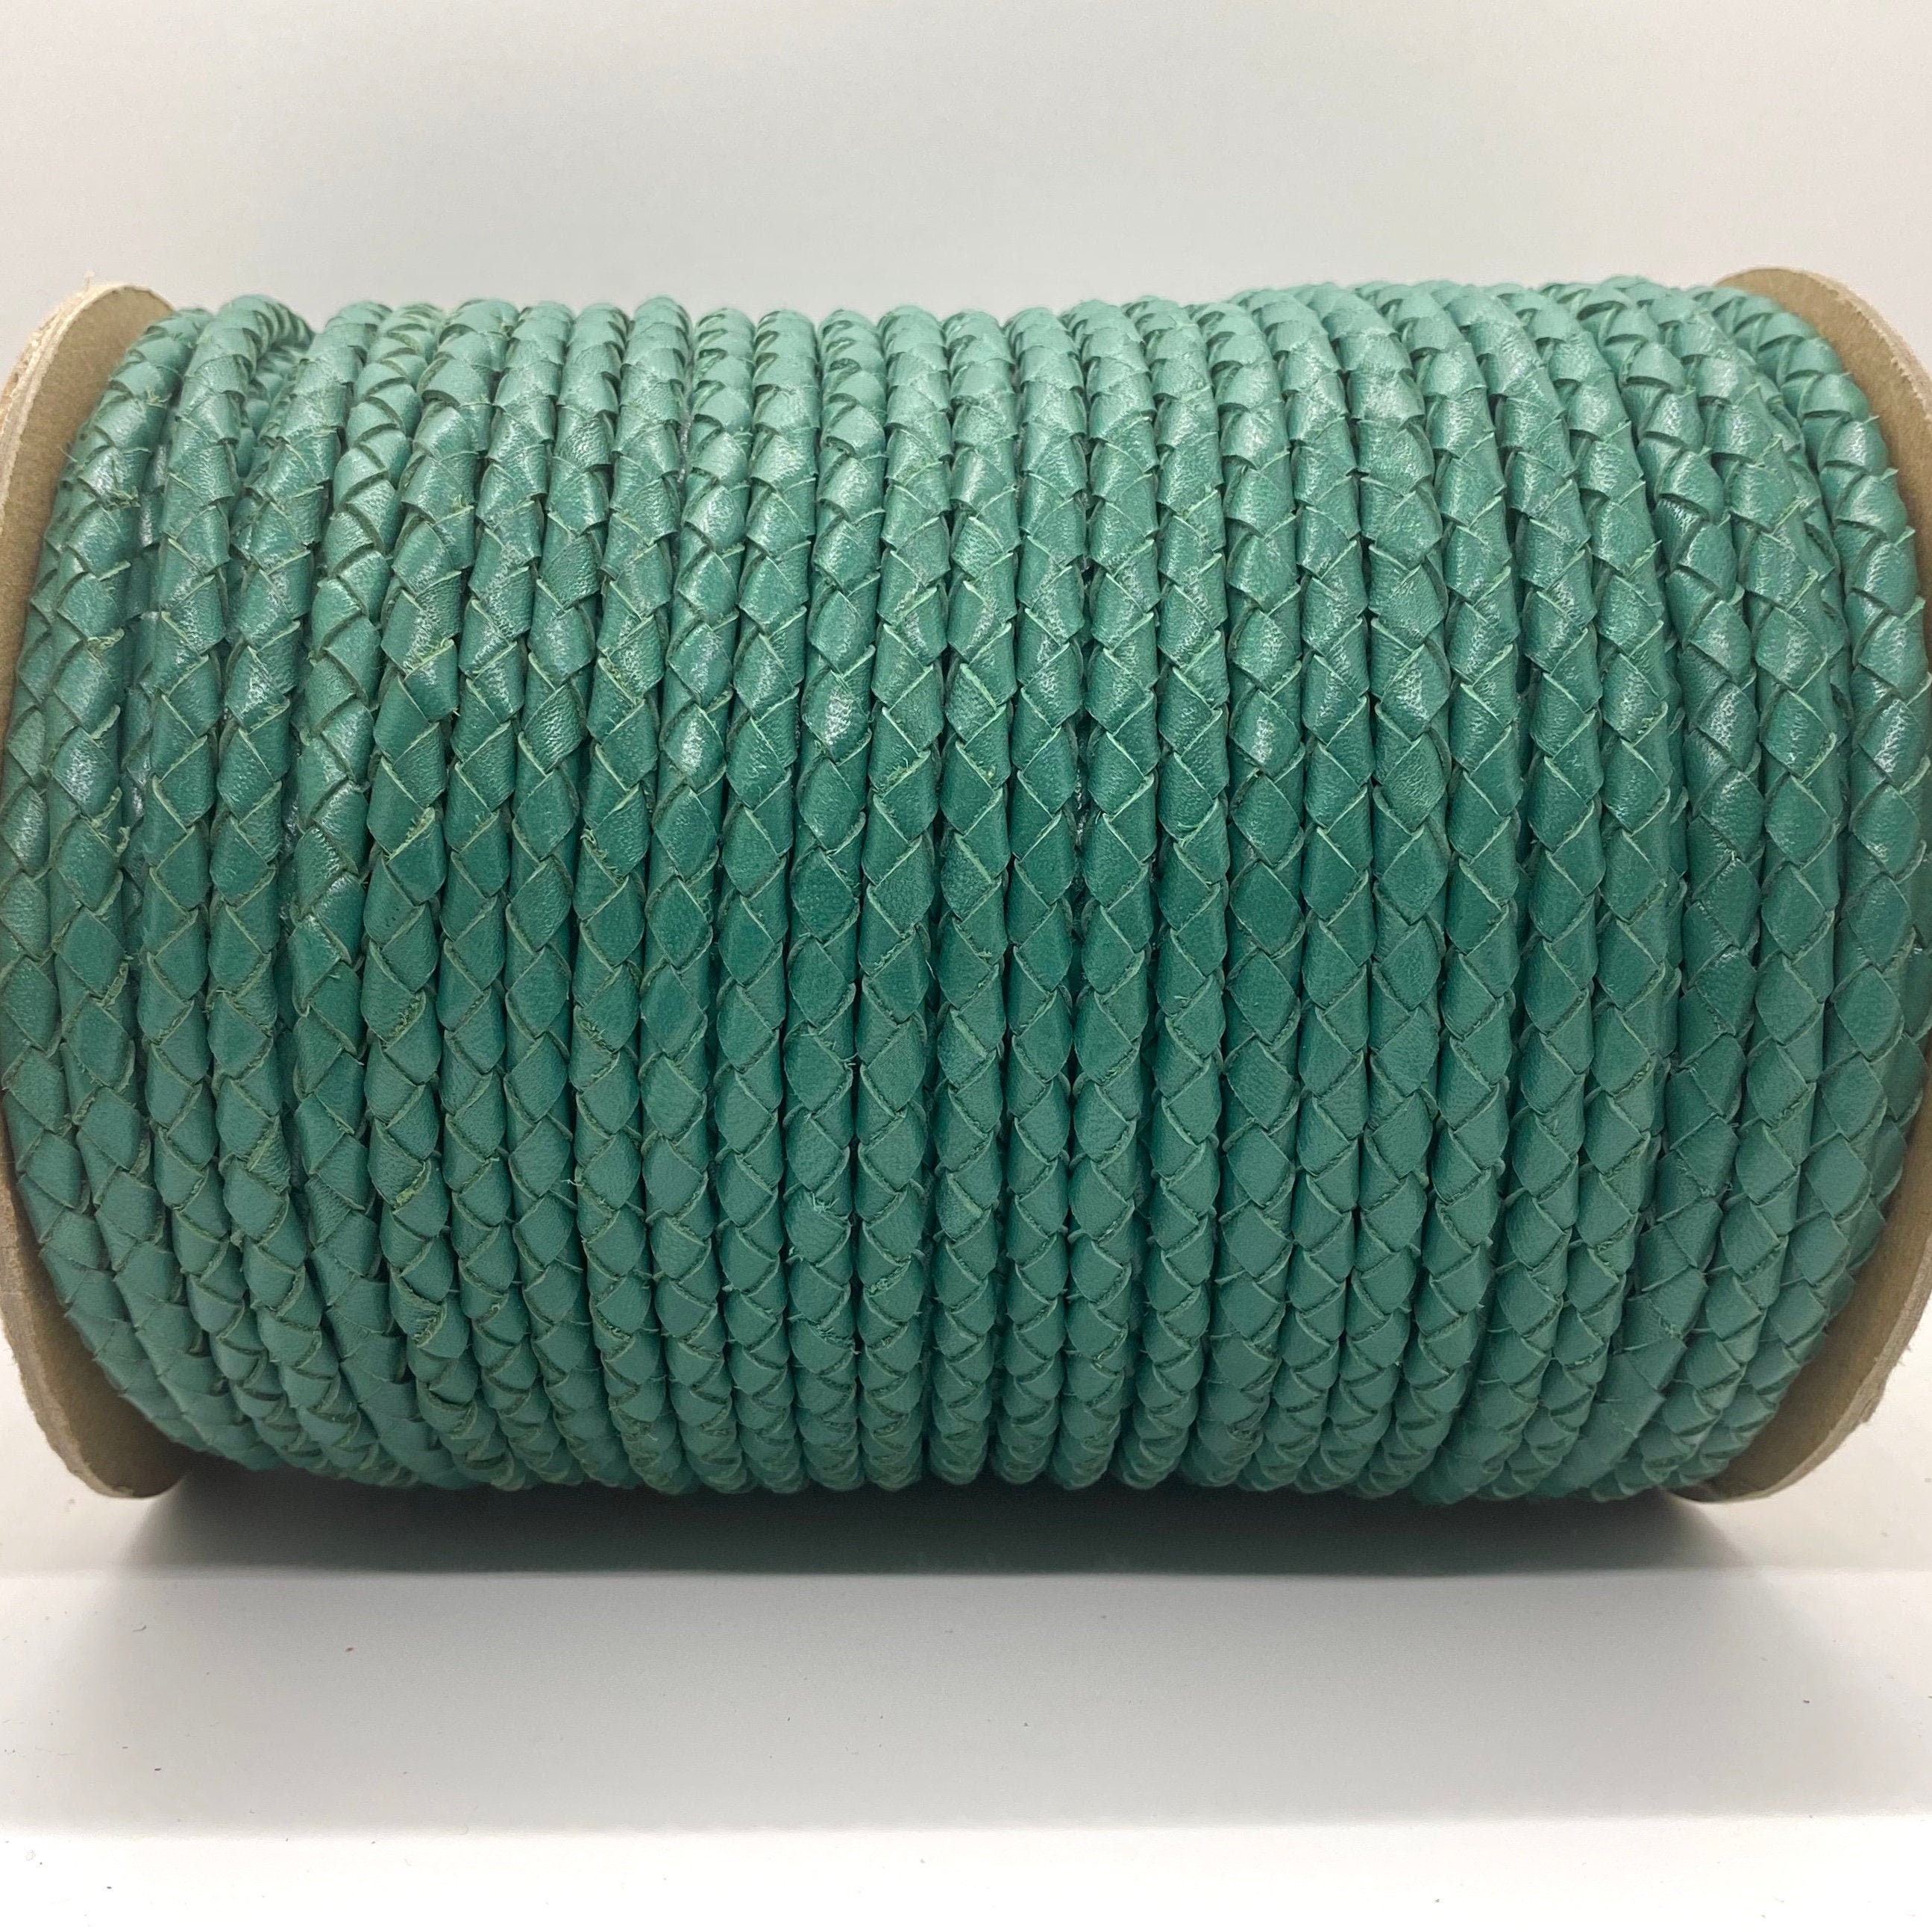 Braided Coton Corde - 6 mm